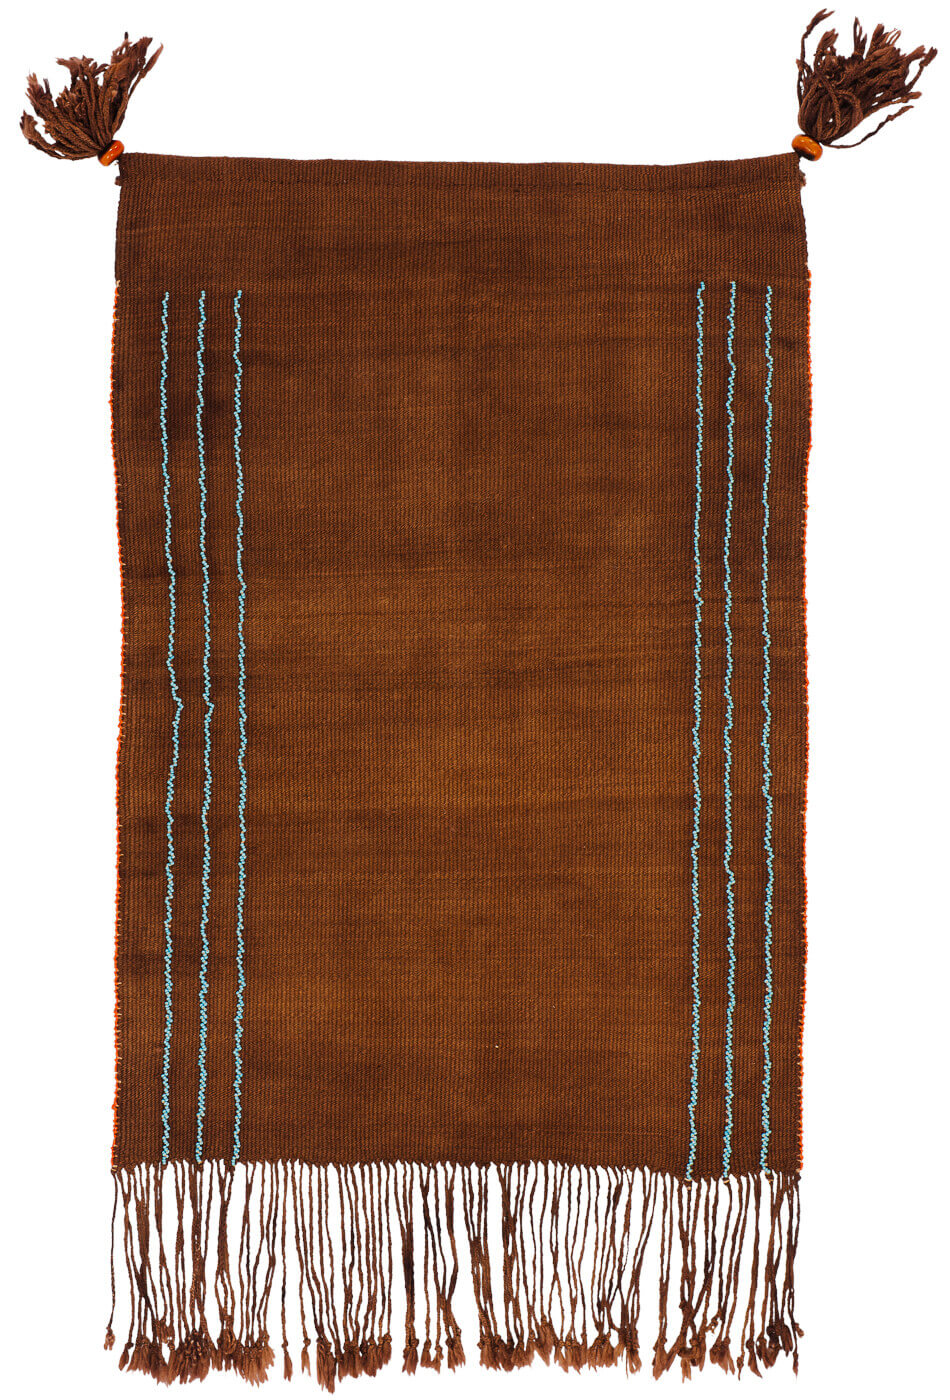 Hand-Woven Tribal Brown / Blue Rug